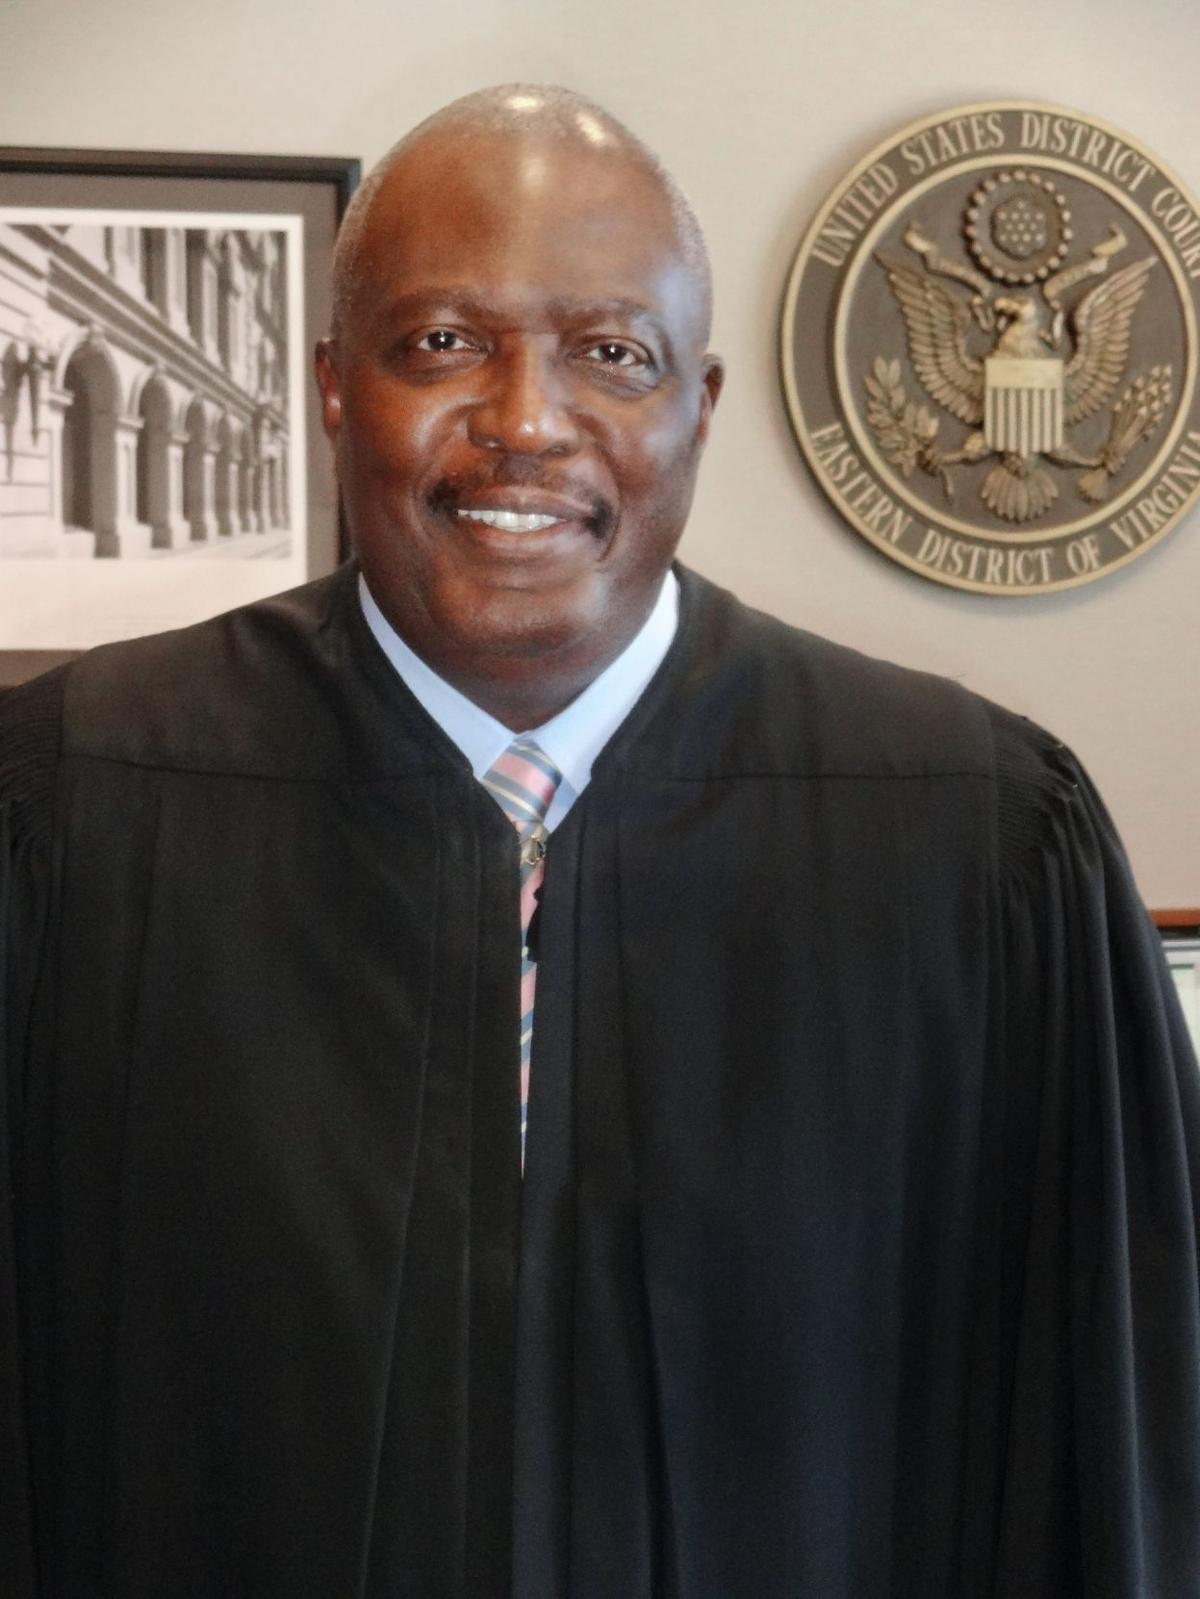 2015 Top 10 honoree James Spencer: History making federal judge still